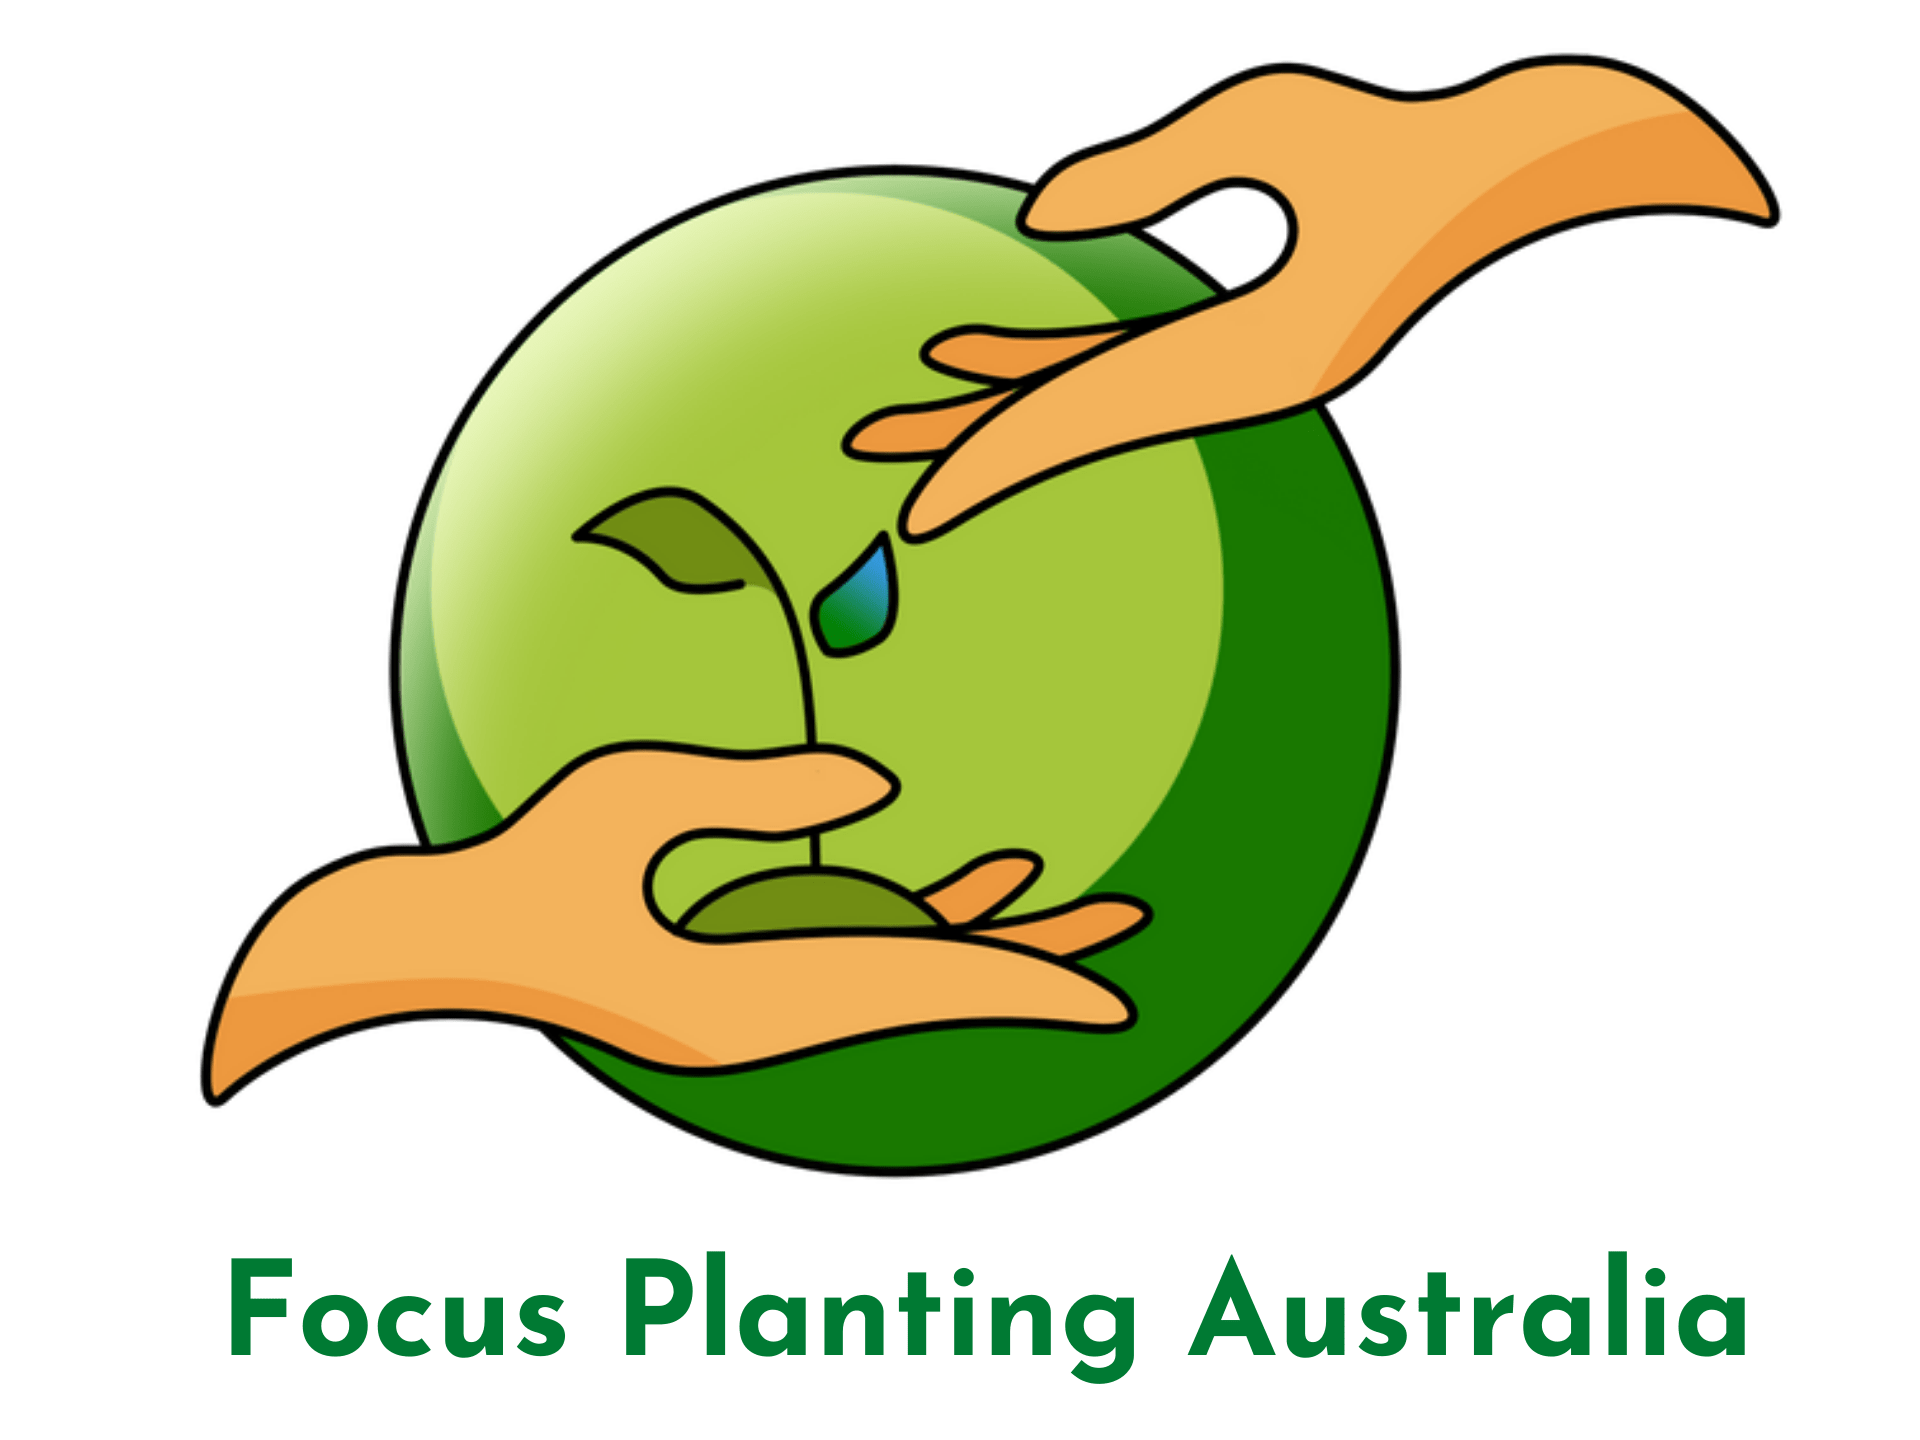 Focus Planting Australia Logo PNG